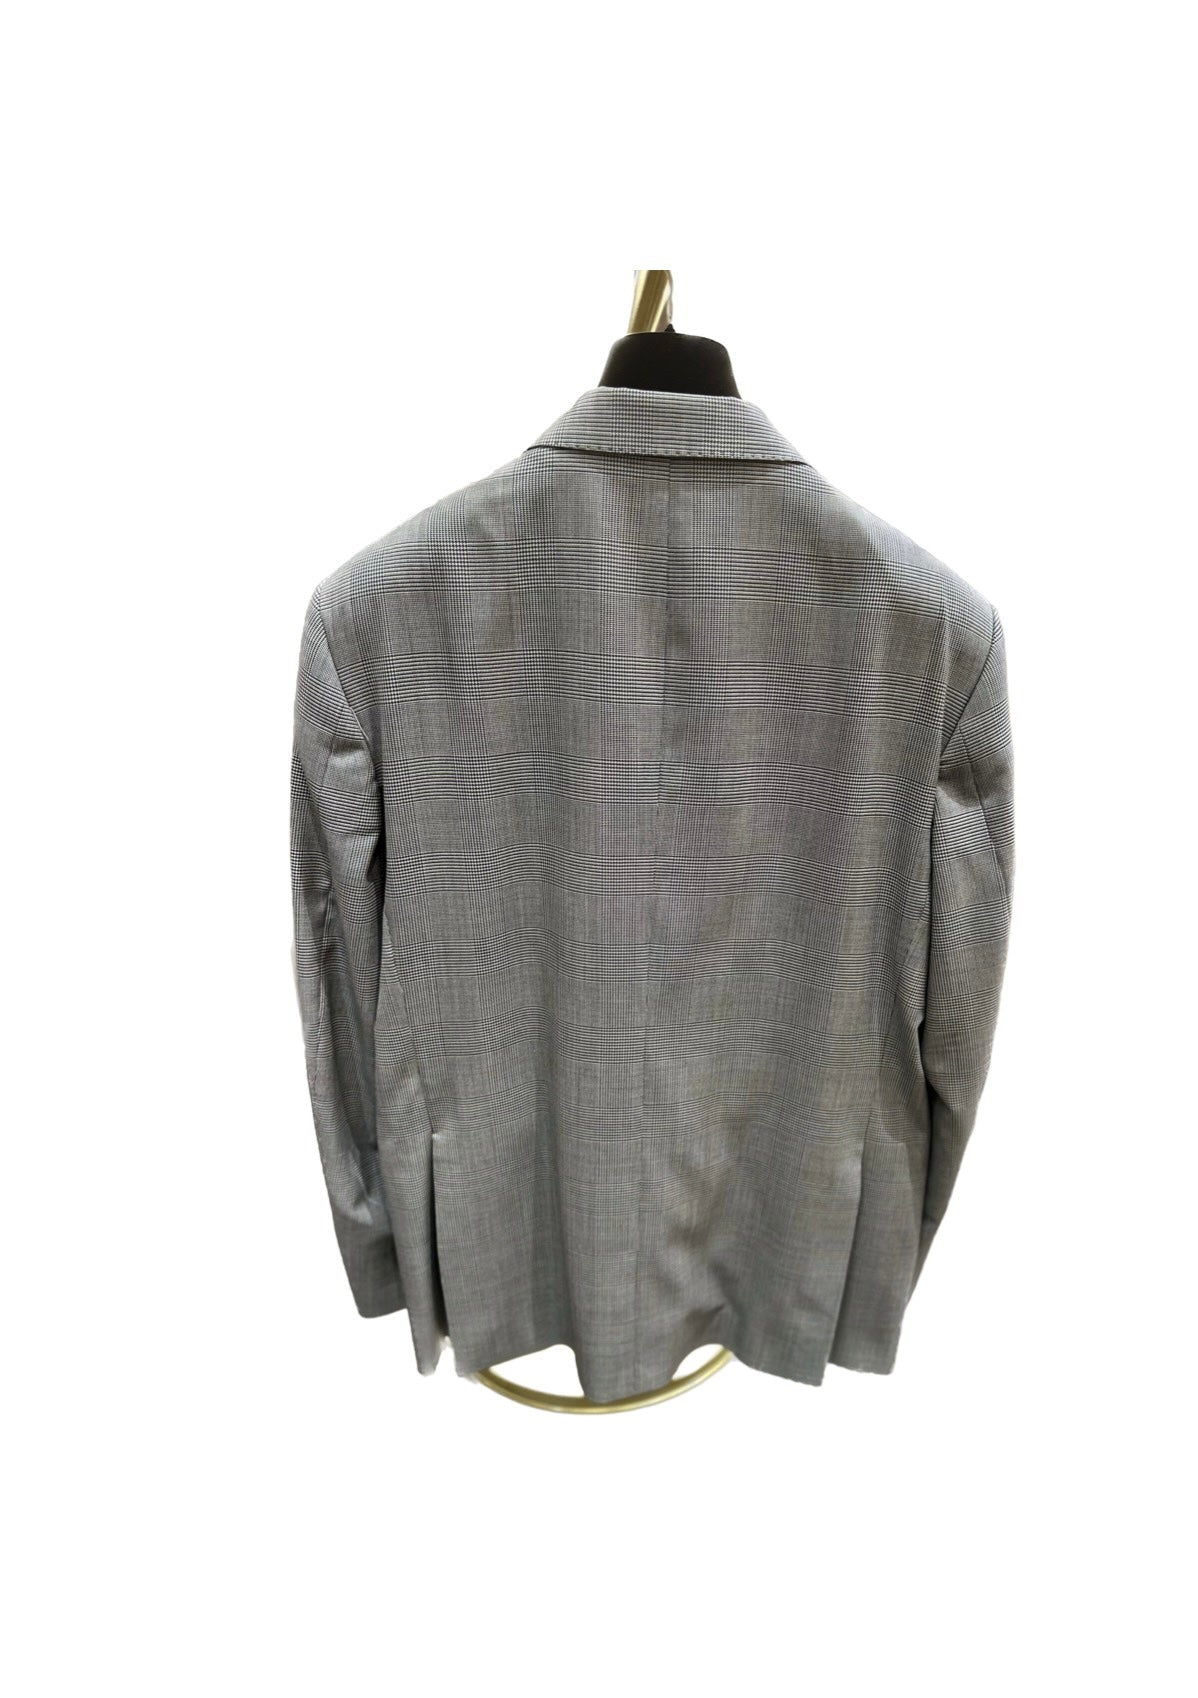 Wool and Silk Gray Sport Coat